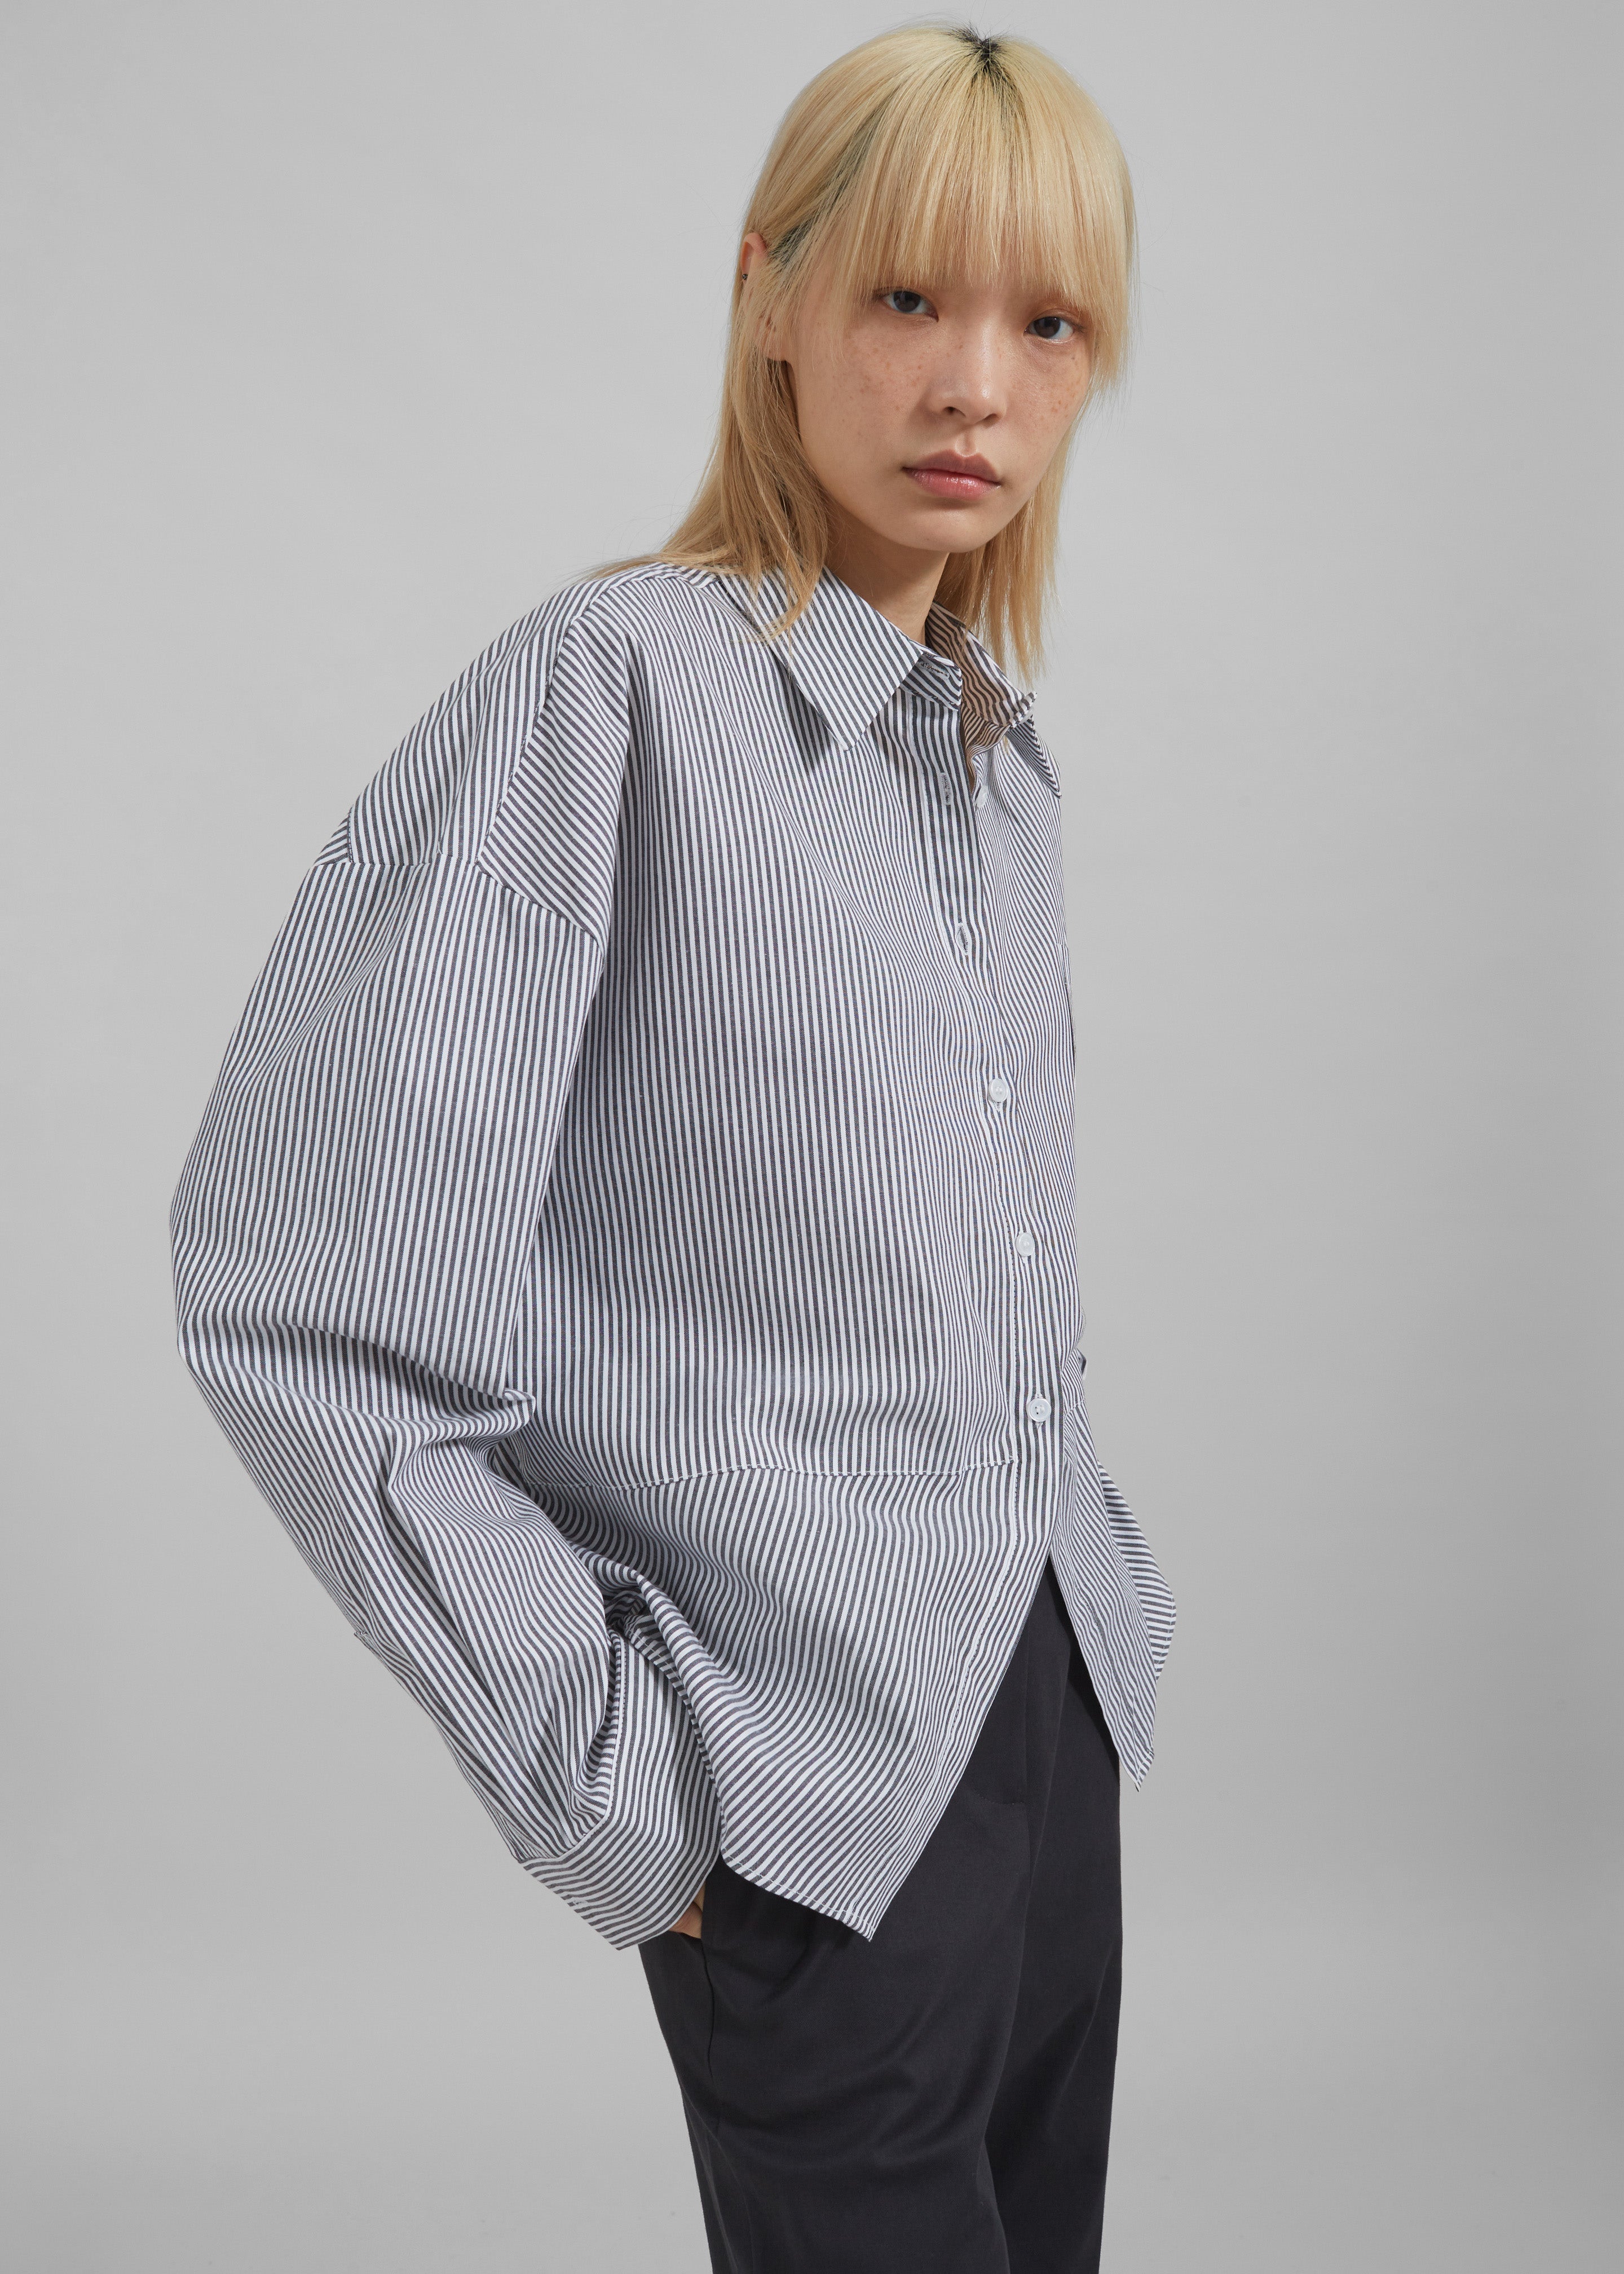 Liv Button Up Shirt - Black/White Stripe - 3